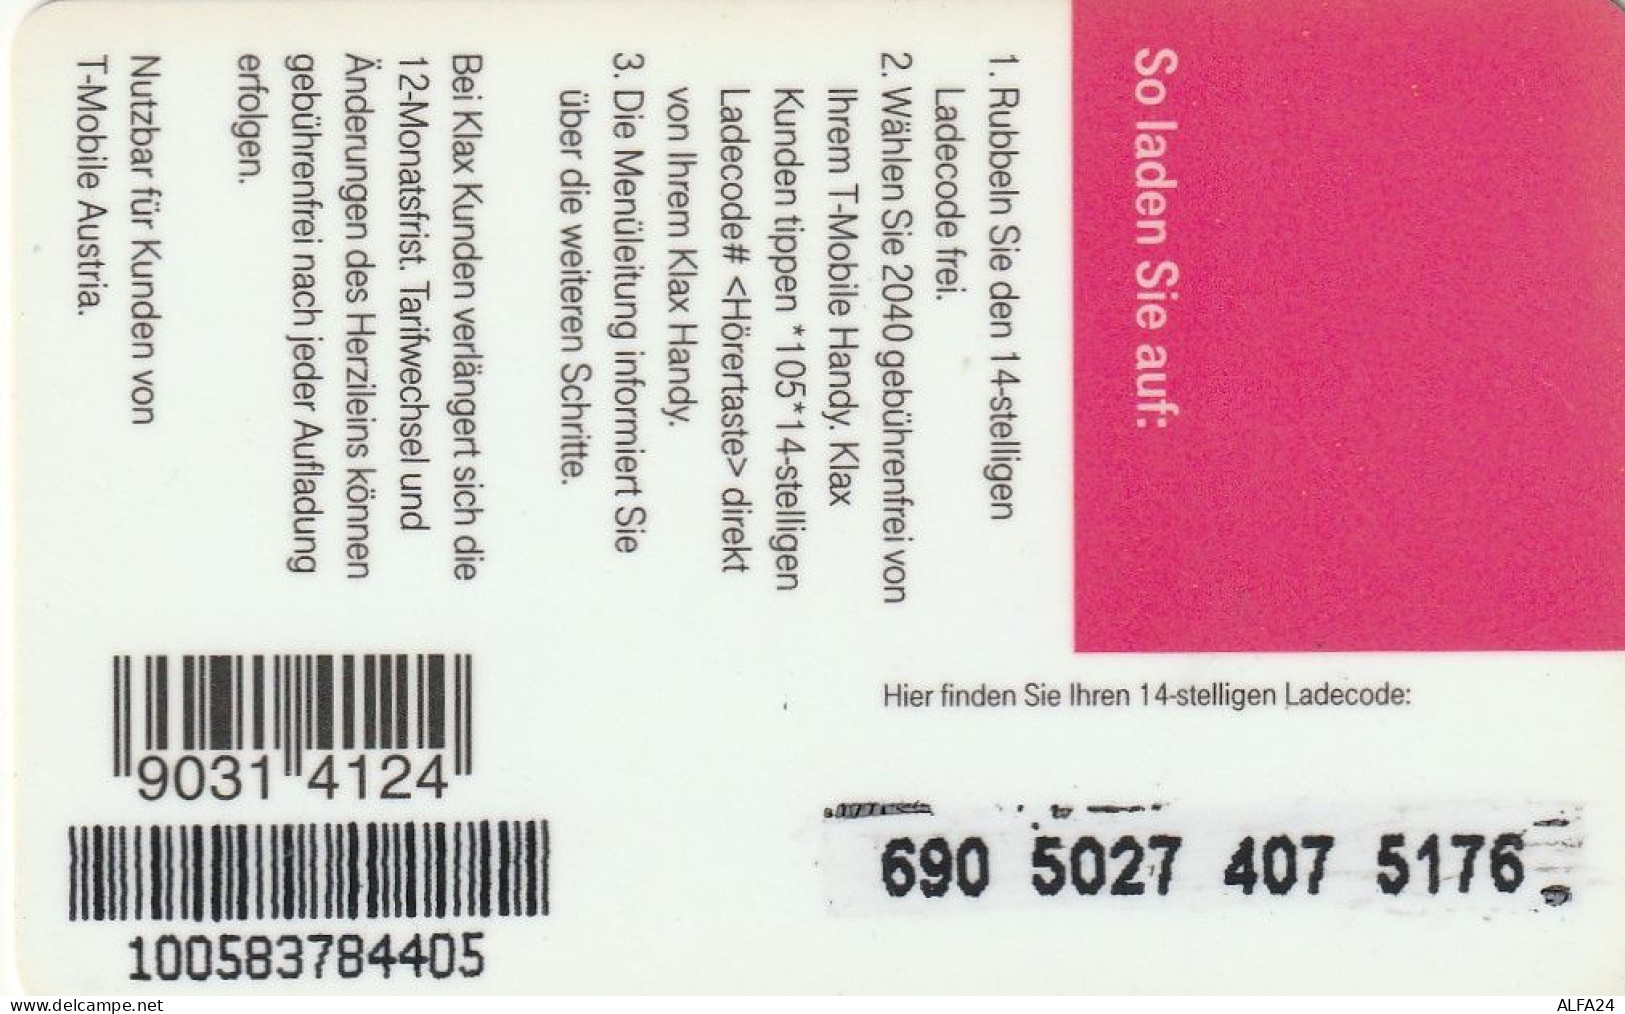 PREPAID PHONE CARD GERMANIA  (CV4702 - Cellulari, Carte Prepagate E Ricariche